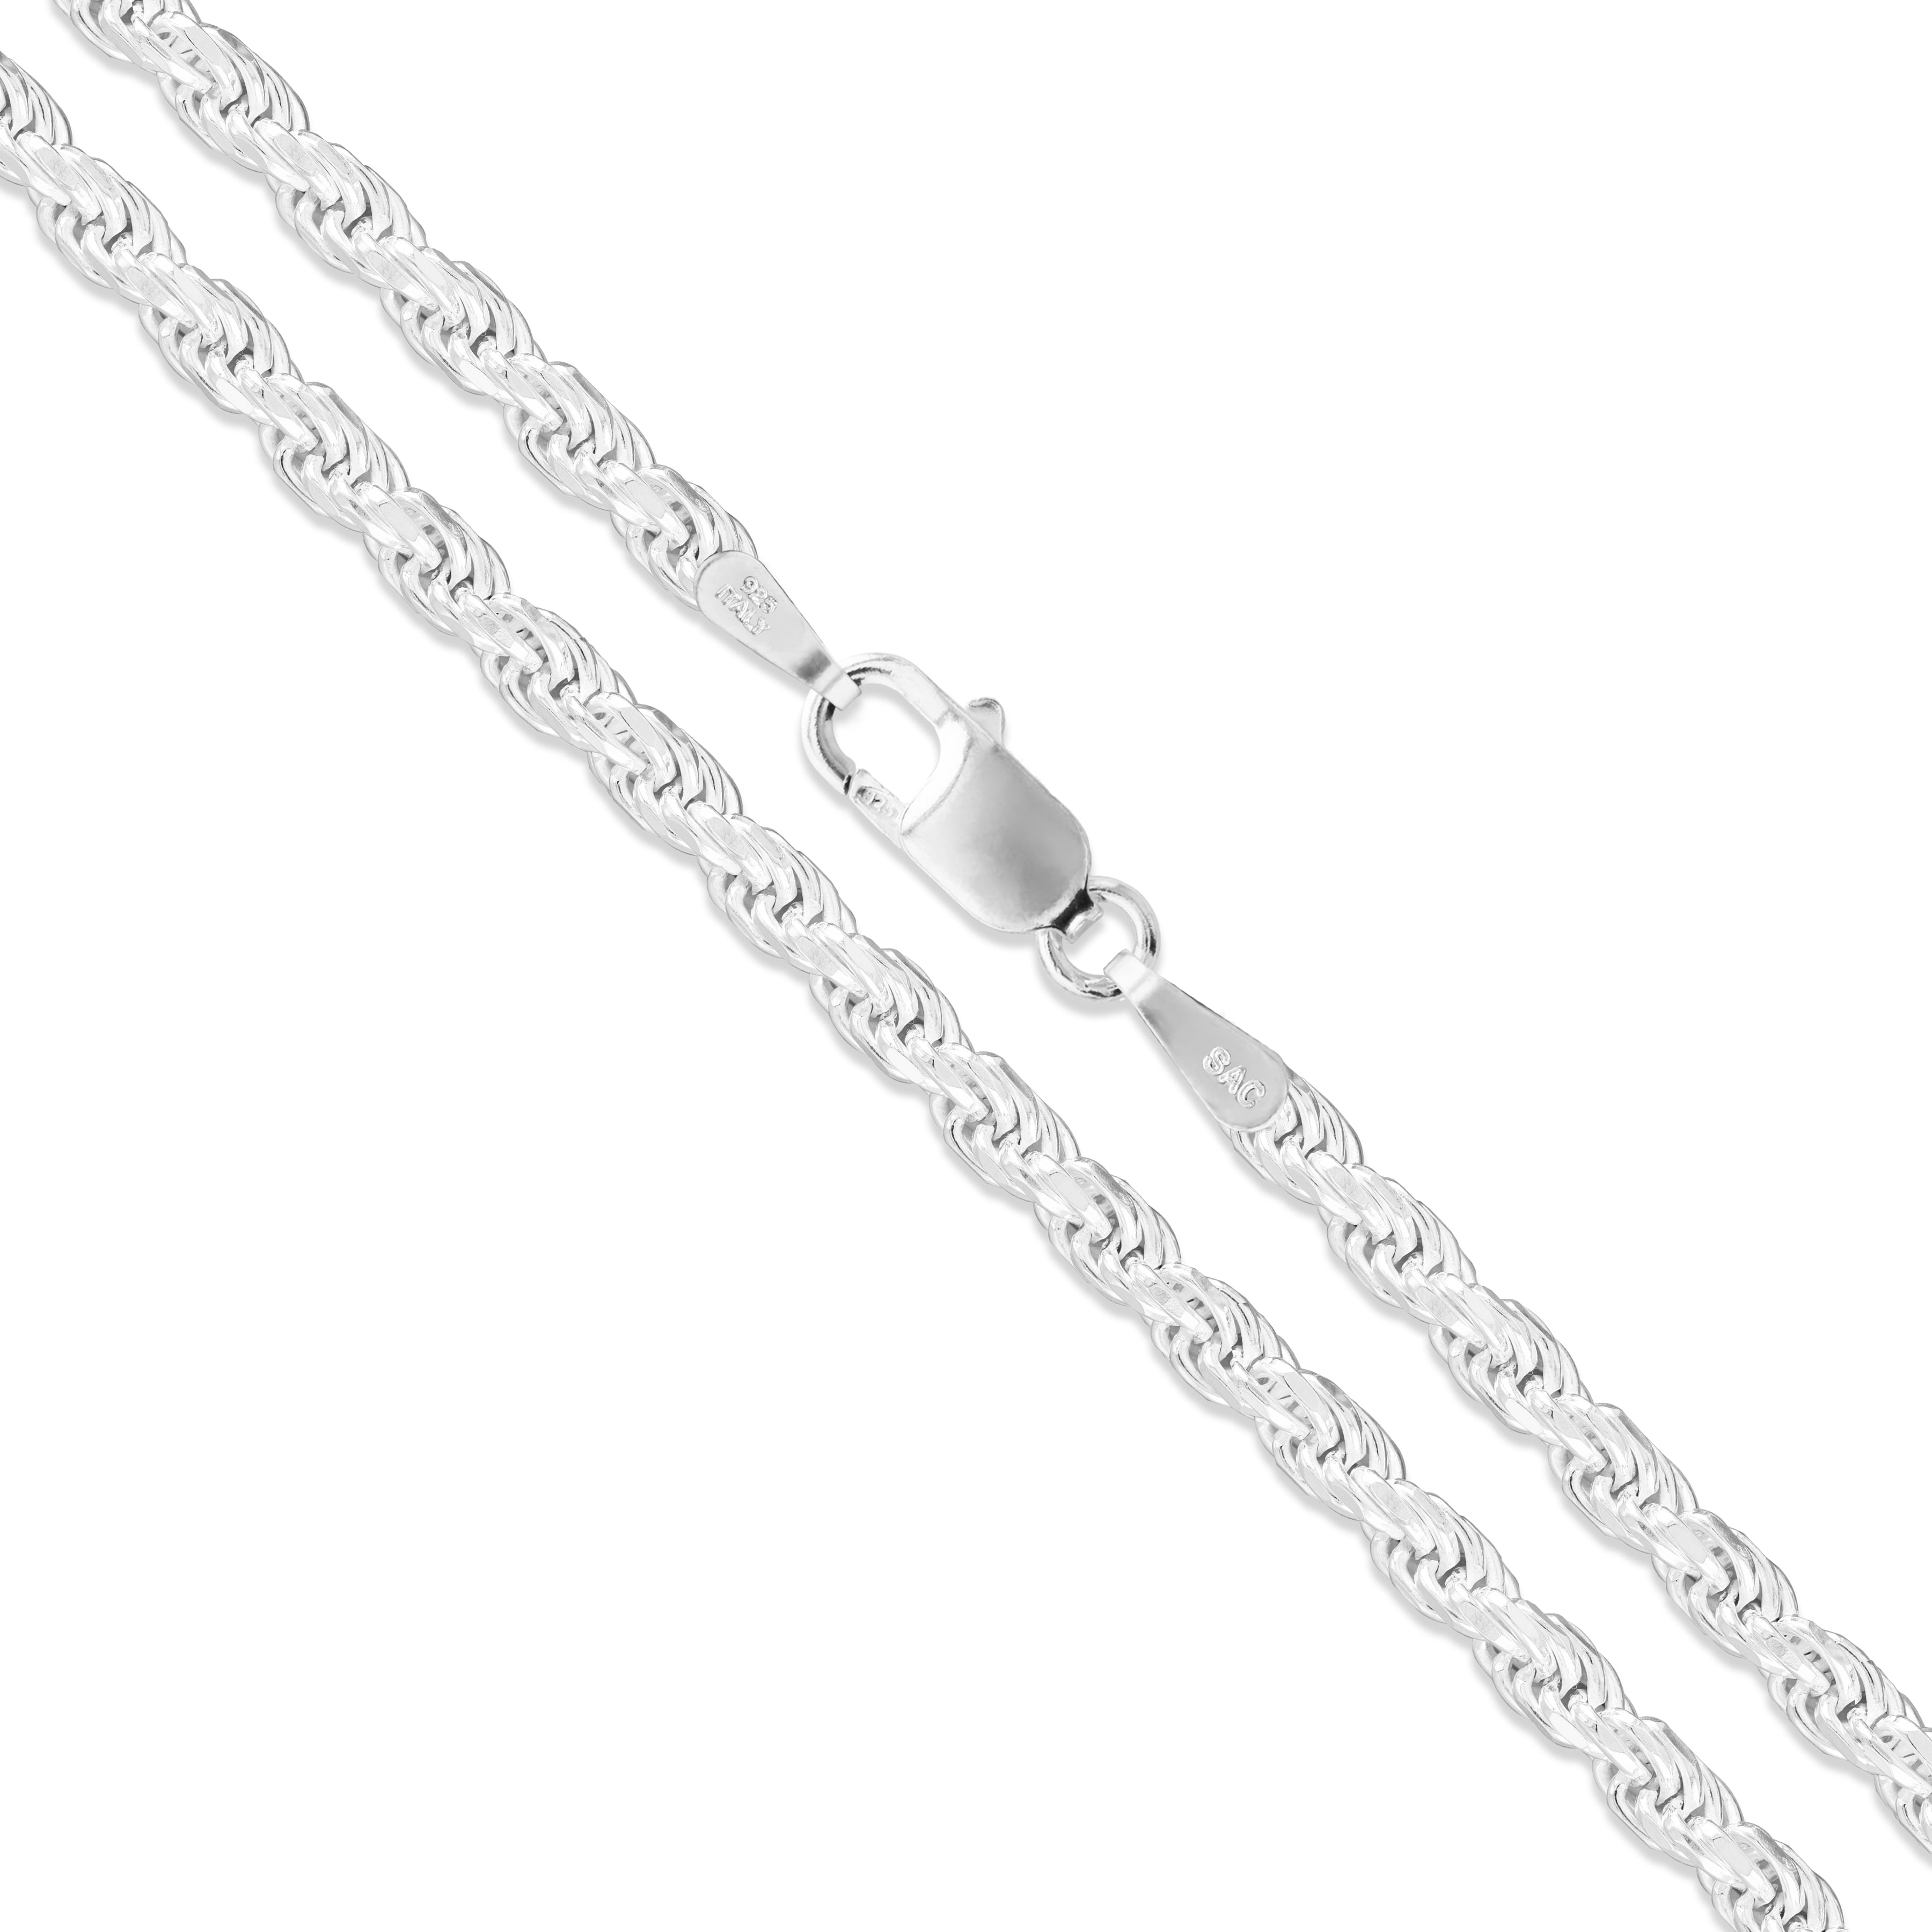 Jewlpire Italian 925 Sterling Silver Chain Necklace for Women